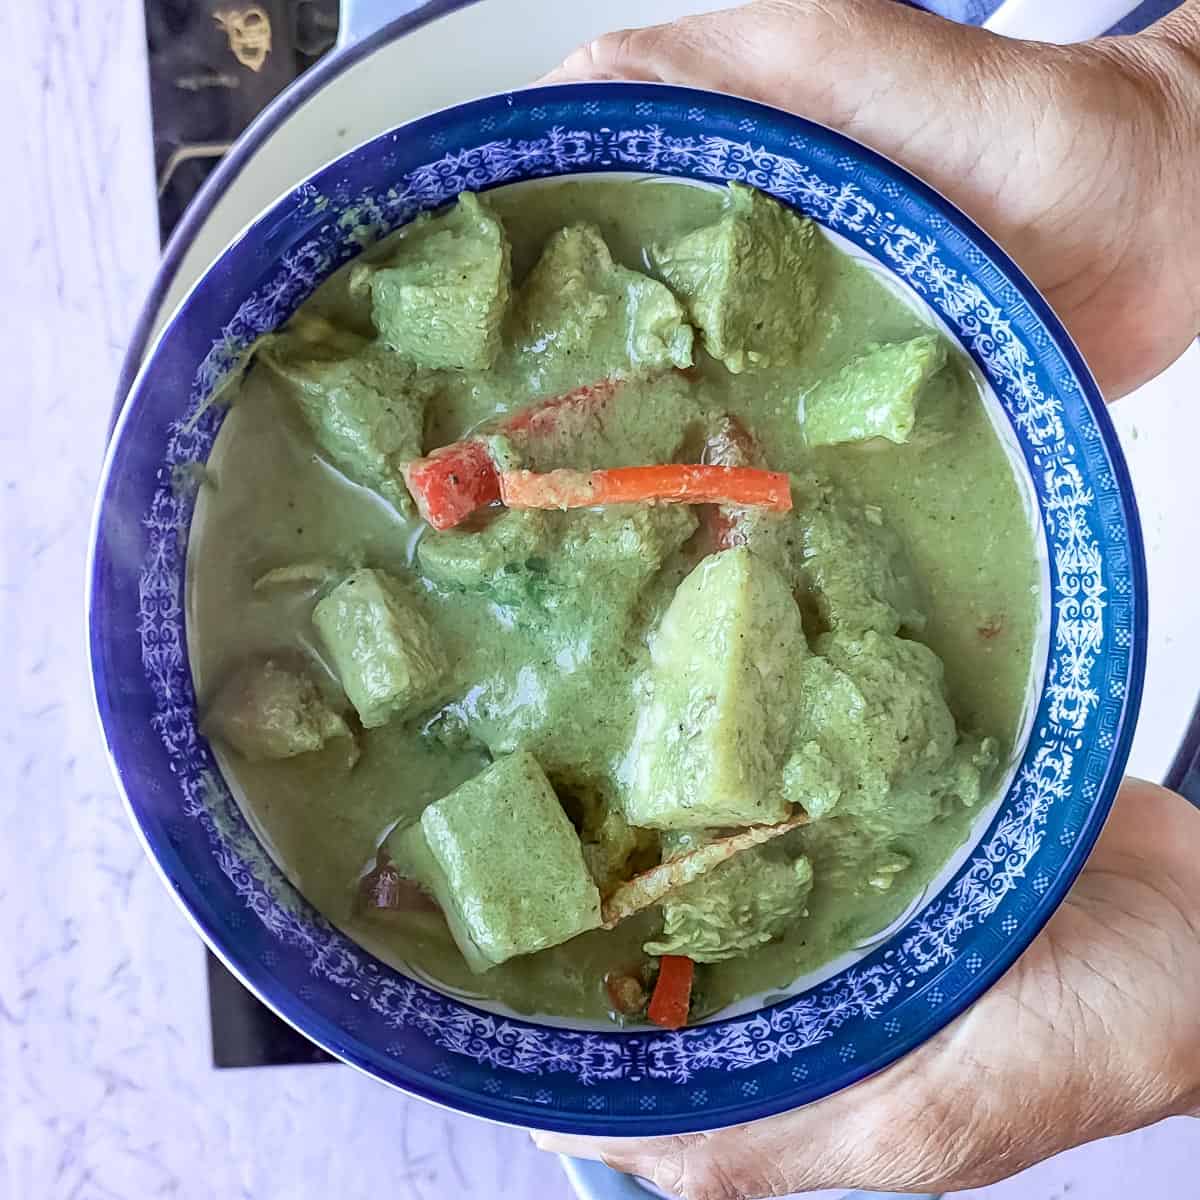 keto Thai chicken curry in a blue bowl.